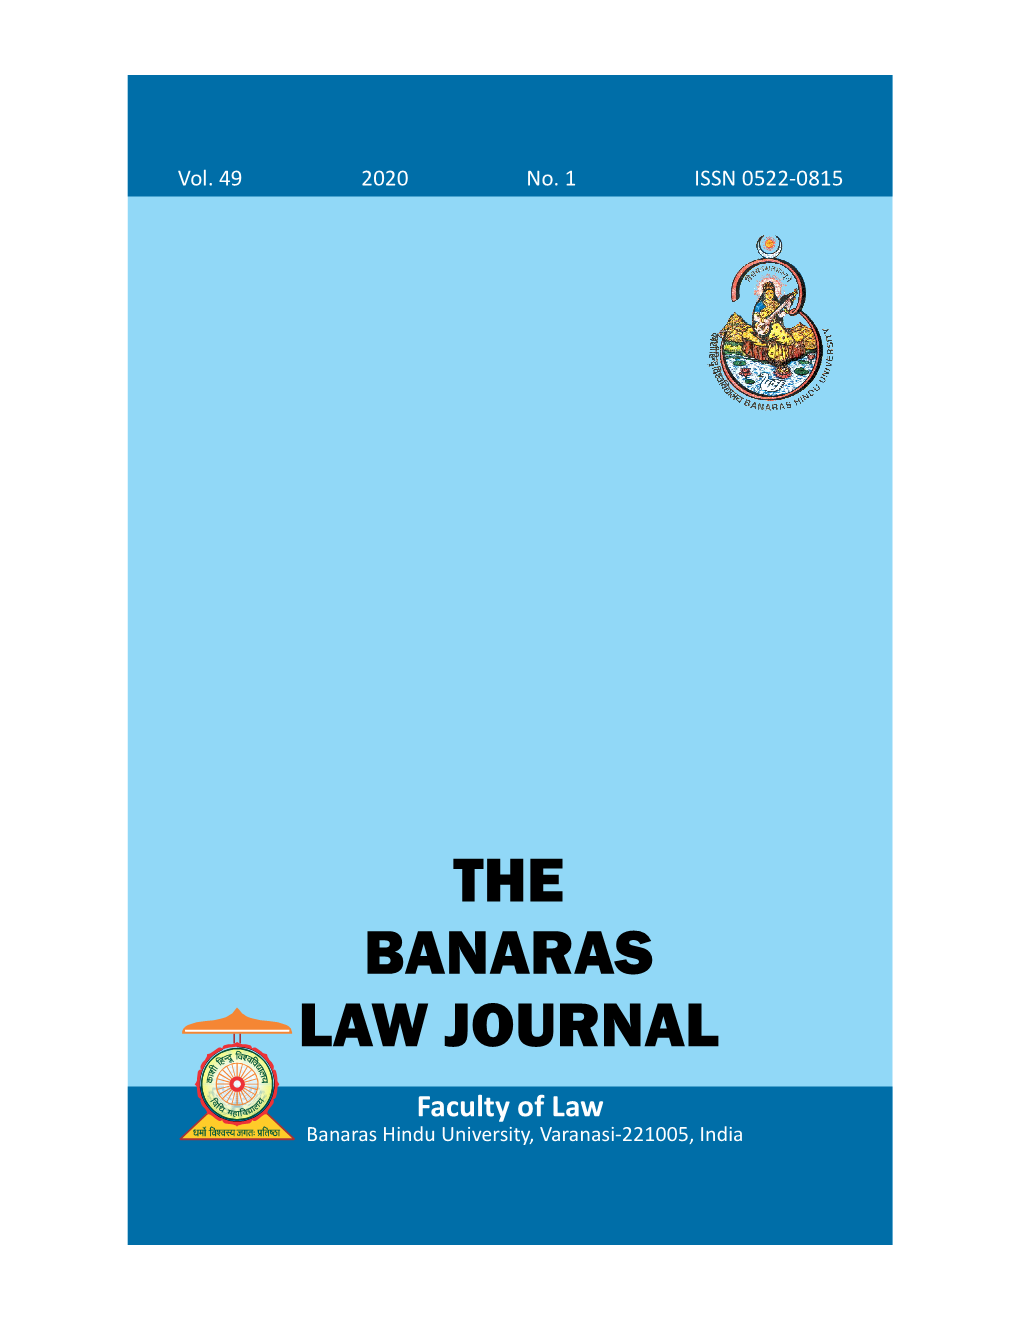 Banaras Law Journal 2020 Vol 49 No. 1